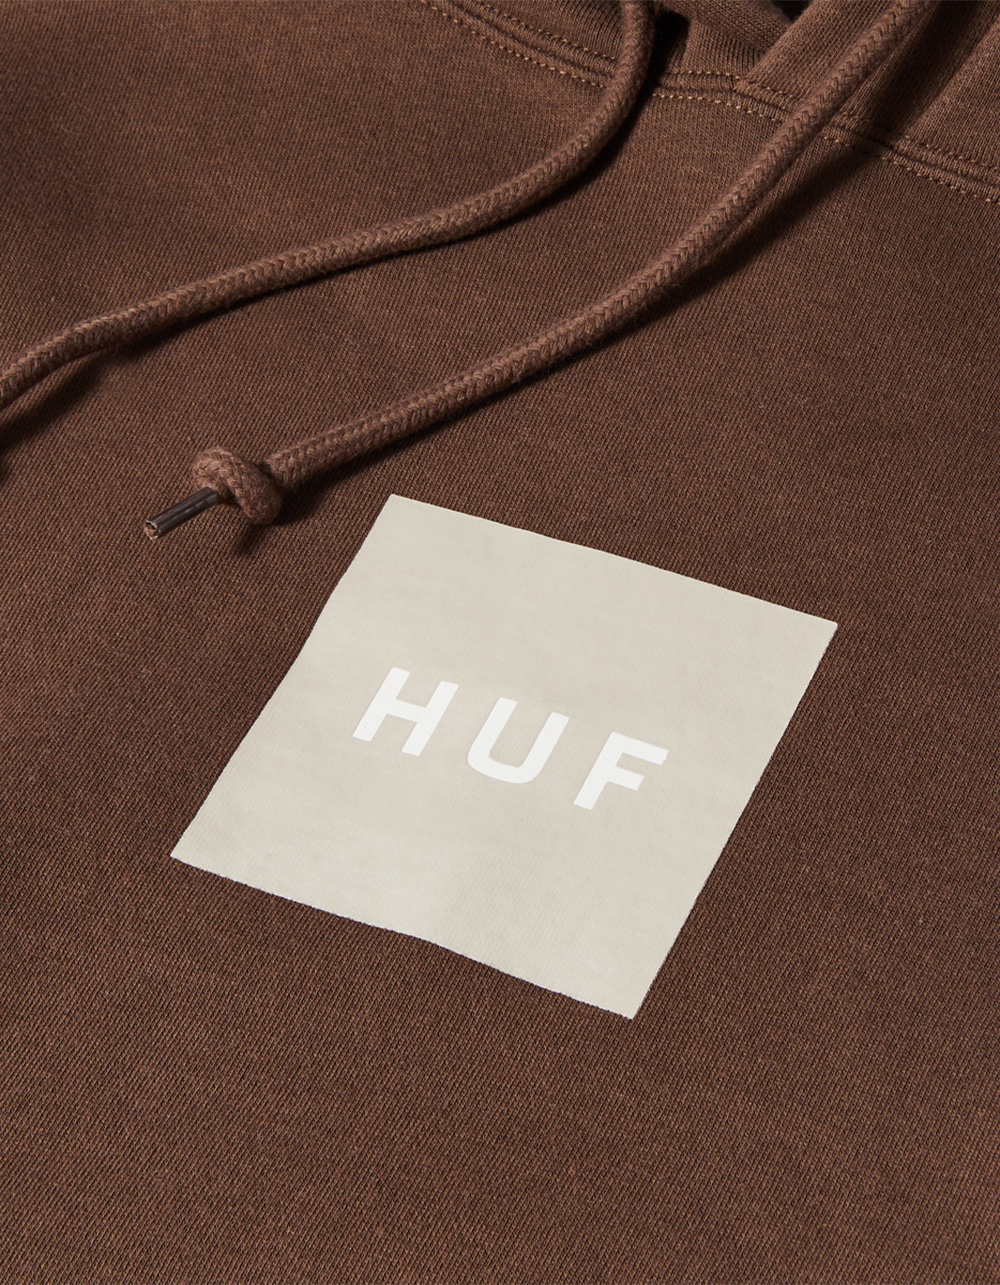 HUF Essentials OG Logo Brown Hoodie